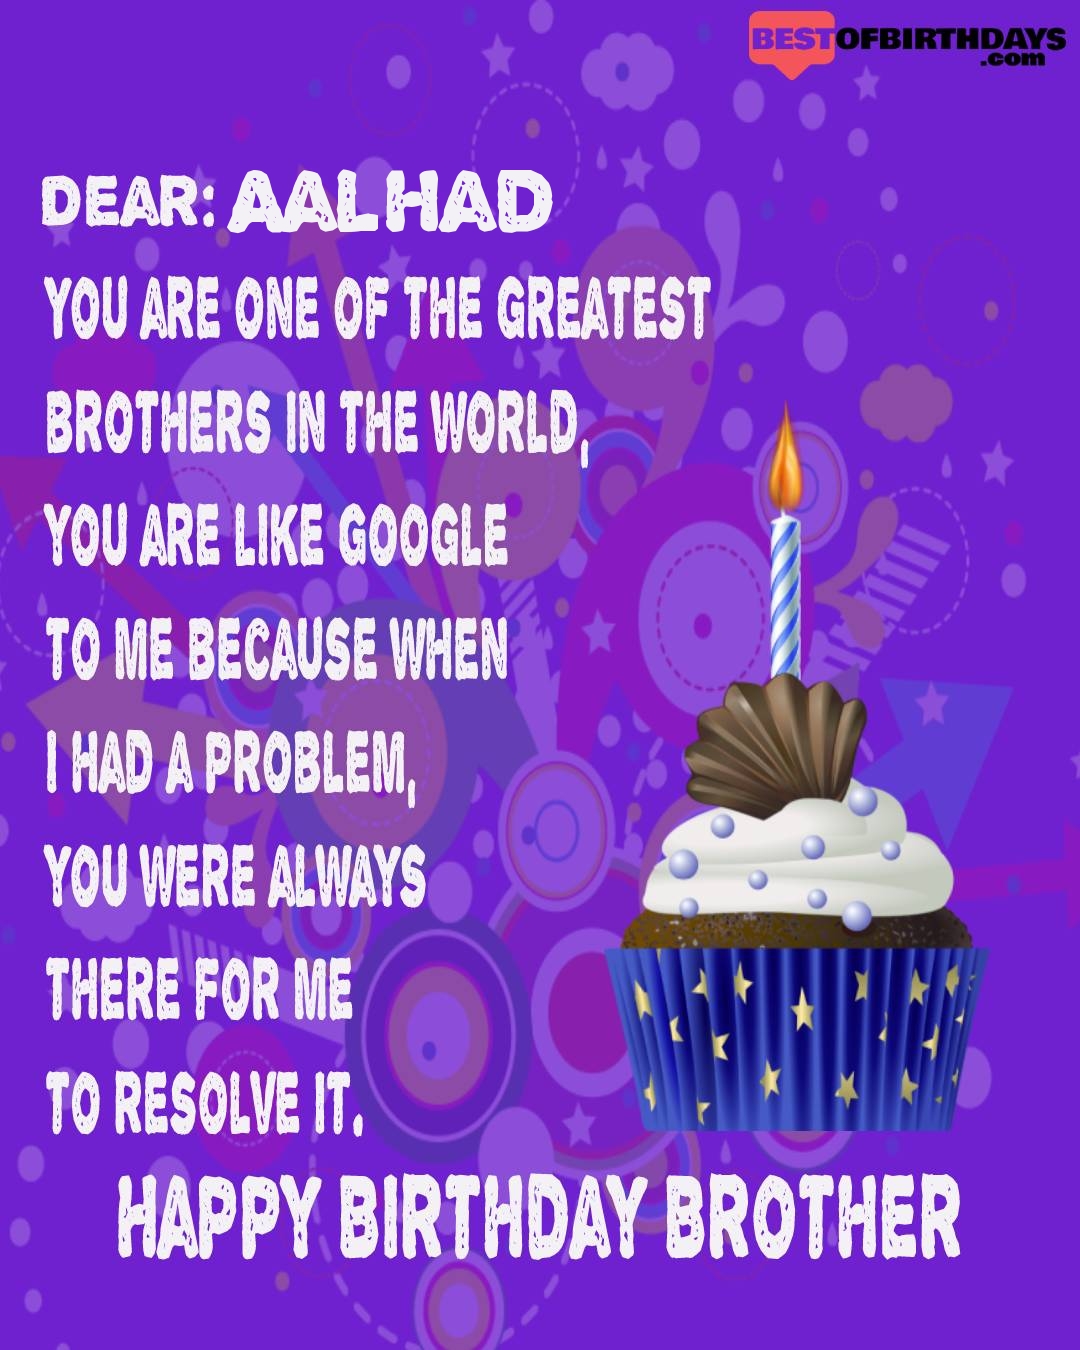 Happy birthday aalhad bhai brother bro